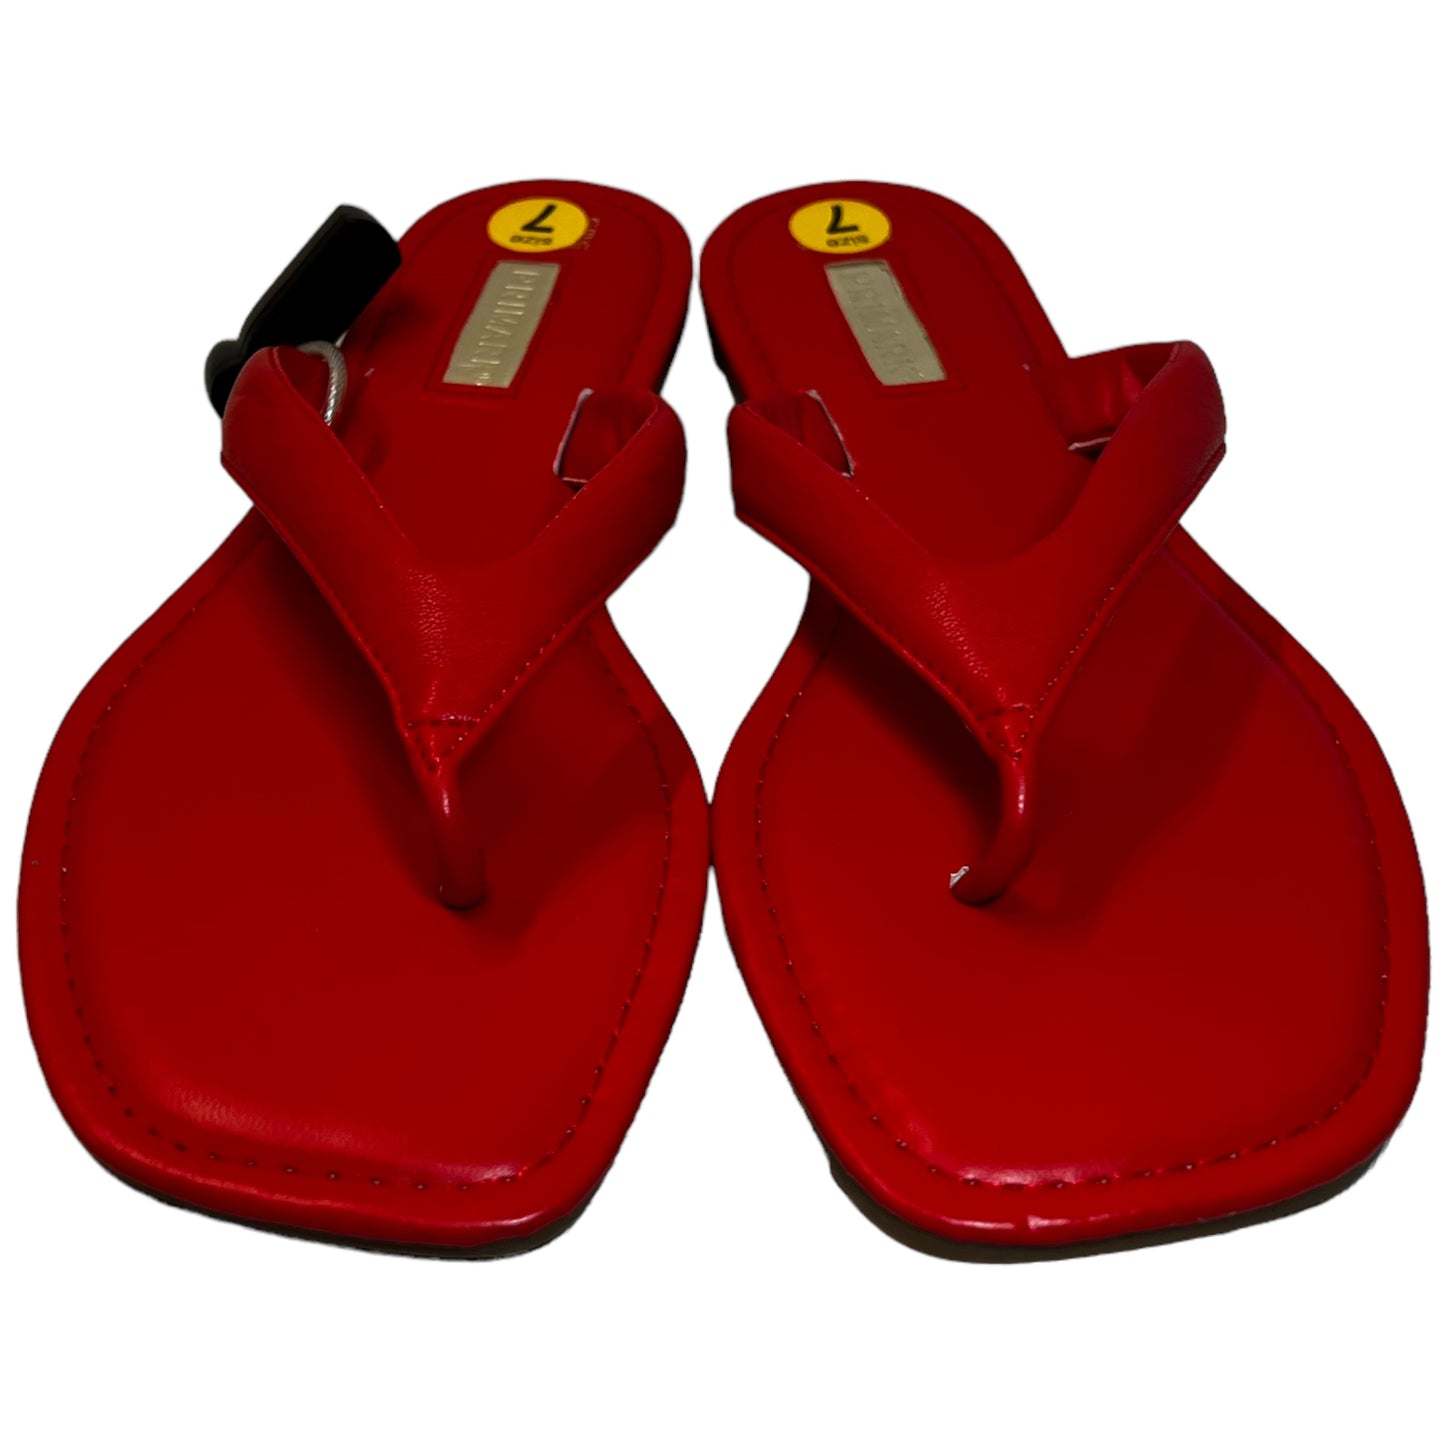 Sandals Flip Flops By Primark  Size: 7